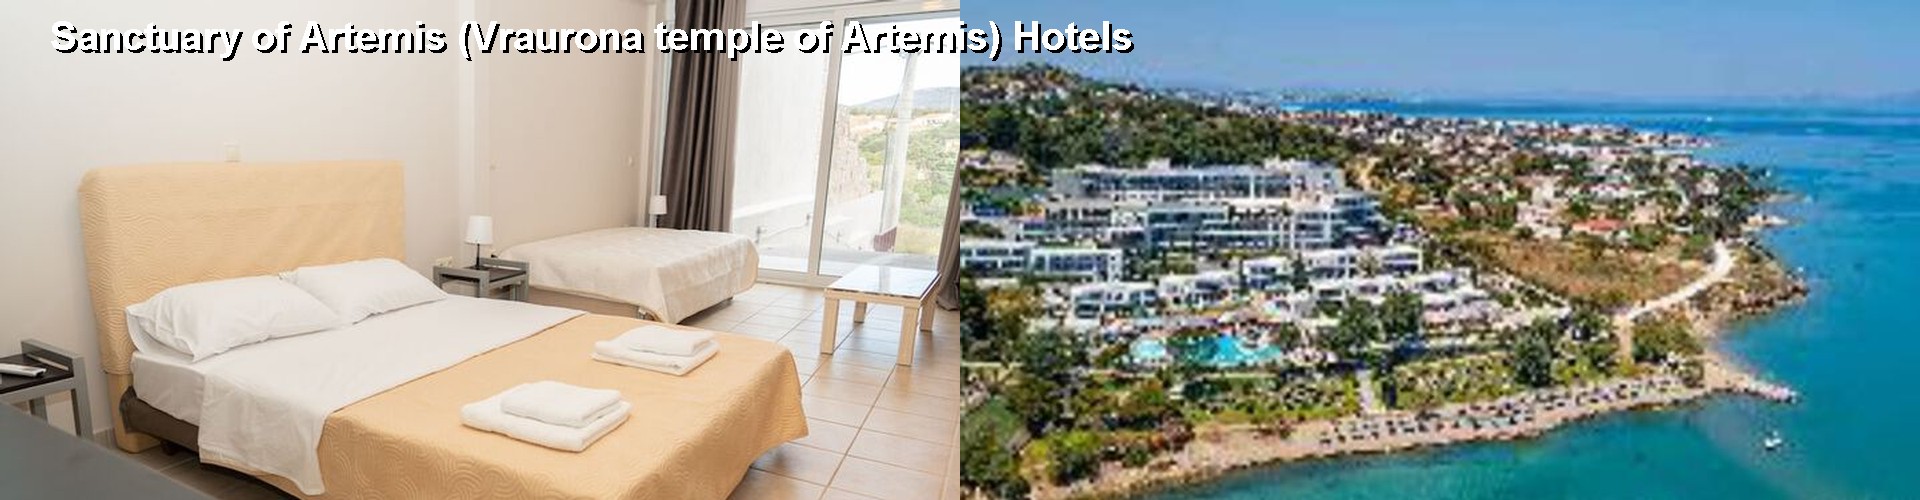 5 Best Hotels near Sanctuary of Artemis (Vraurona temple of Artemis)